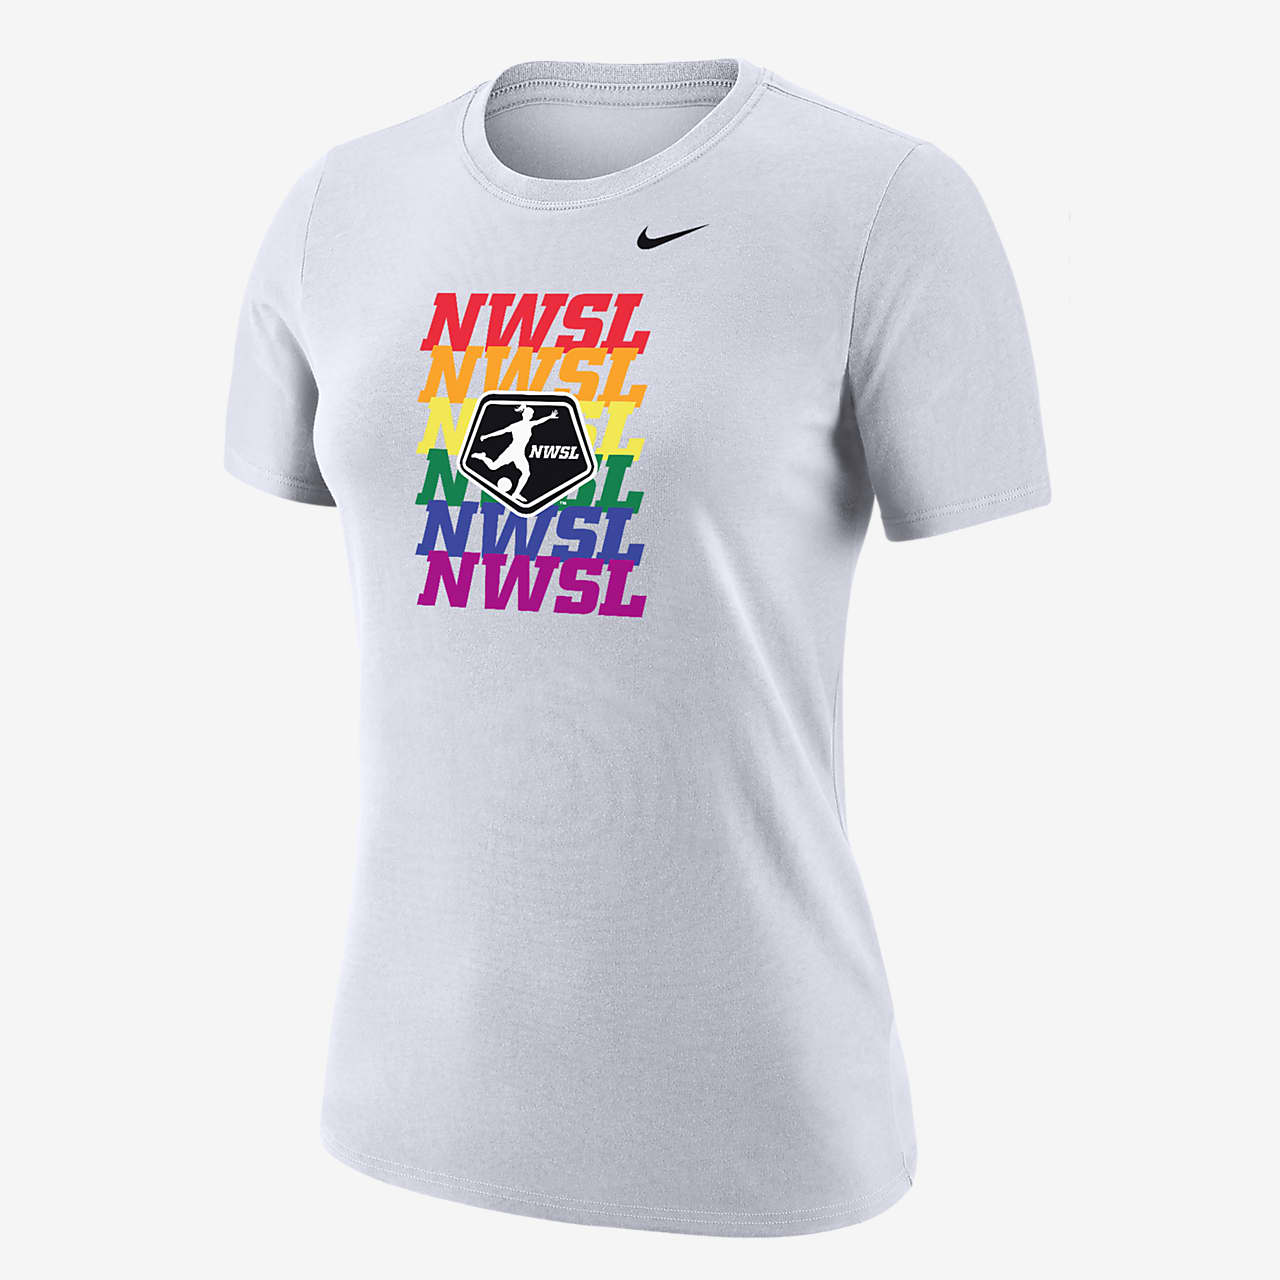 NWSL Women's Nike Soccer T-Shirt.